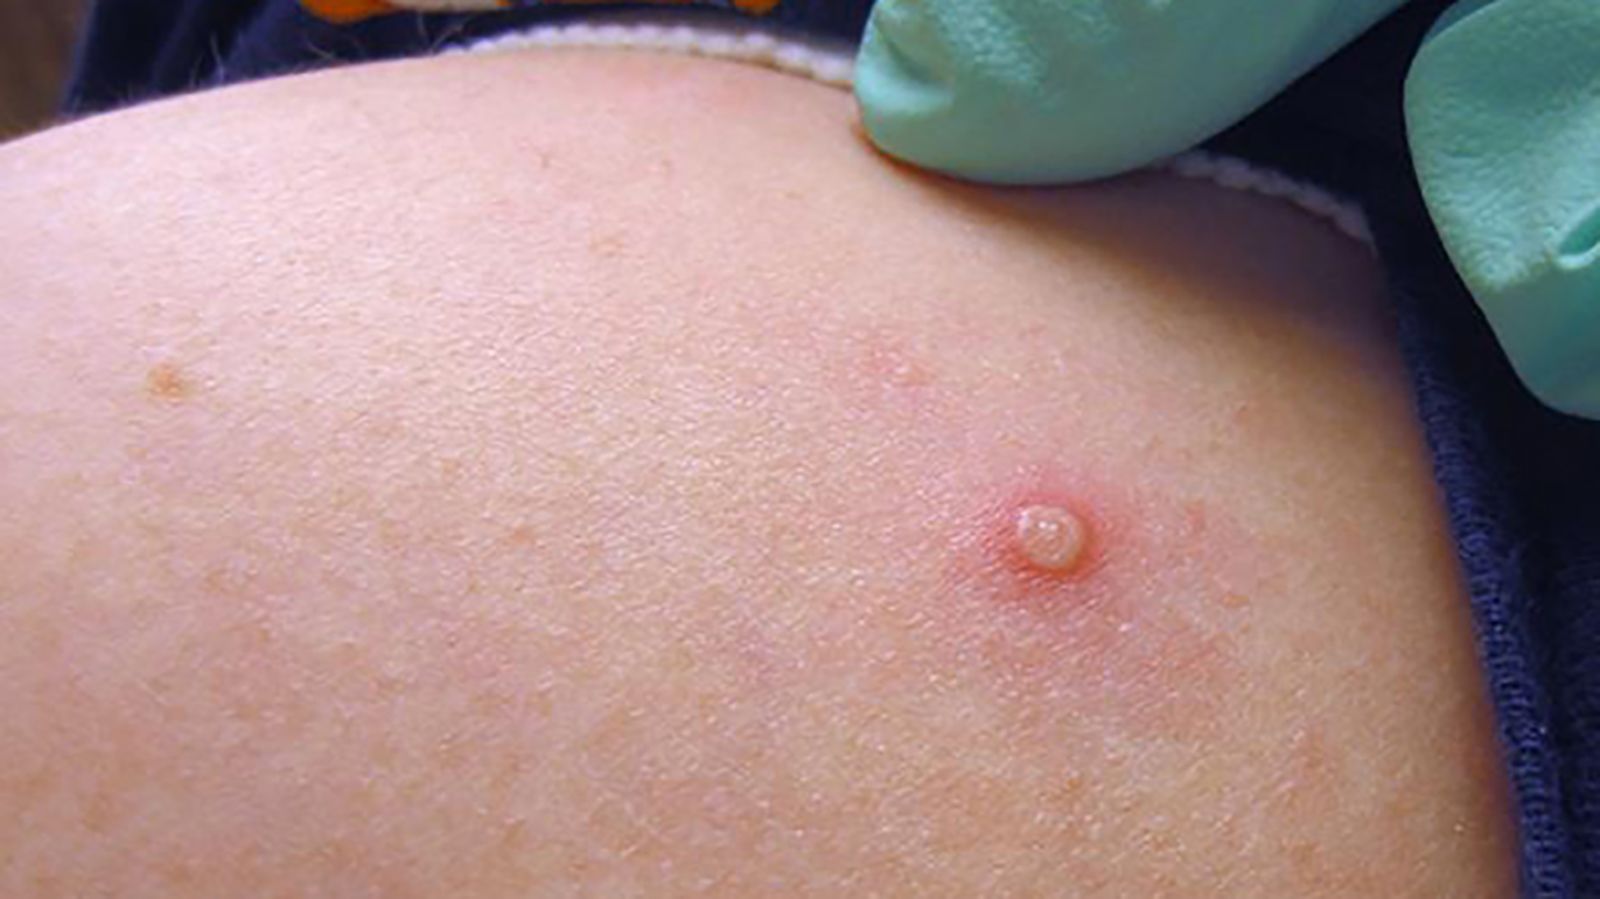 Monkeypox rash and scars: What does monkeypox look like? - ABC News